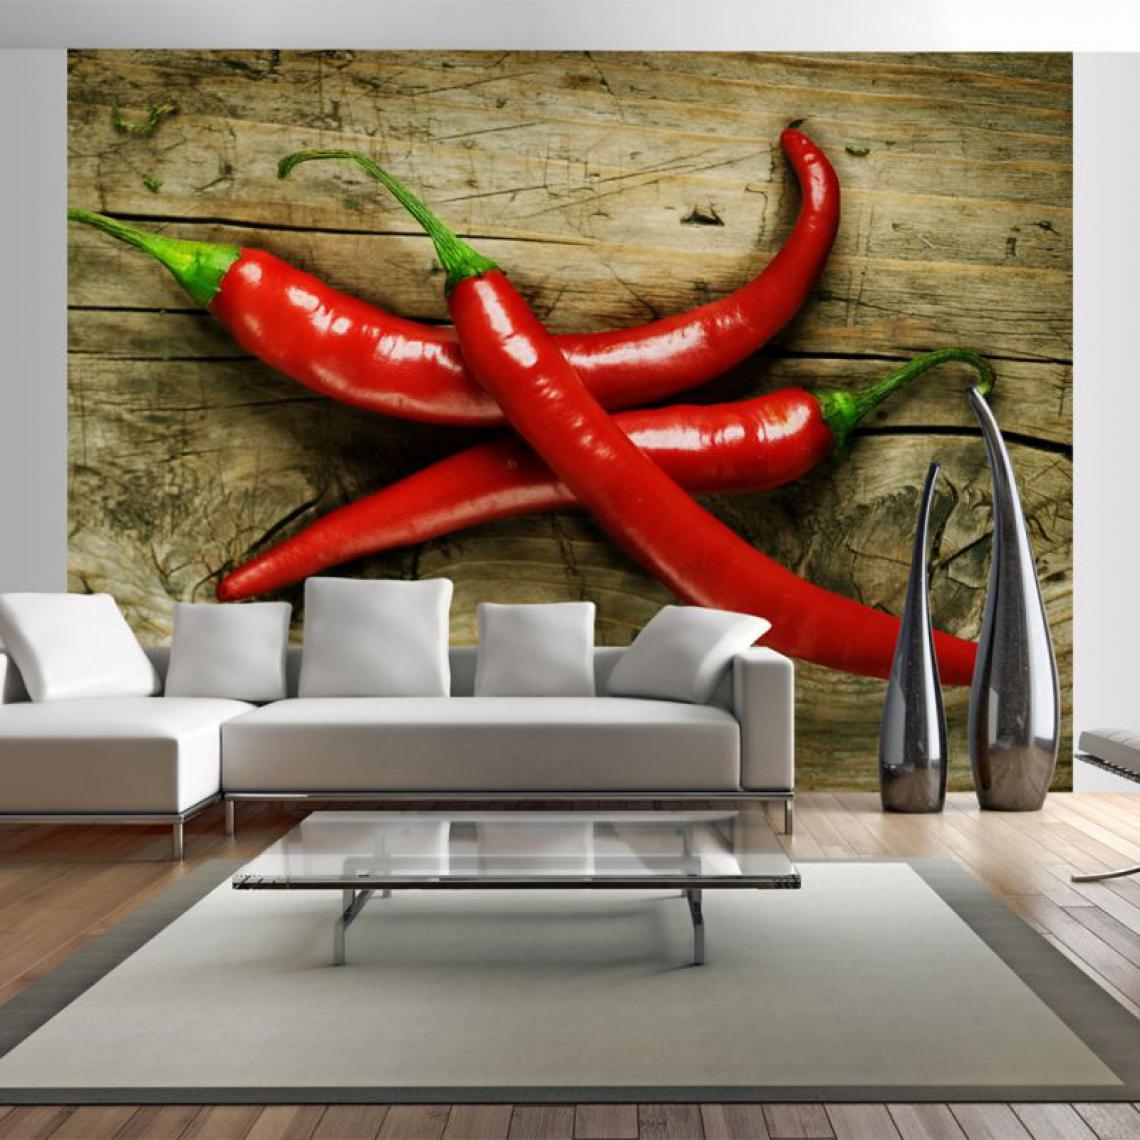 Artgeist - Papier peint - Spicy chili peppers .Taille : 200x154 - Papier peint